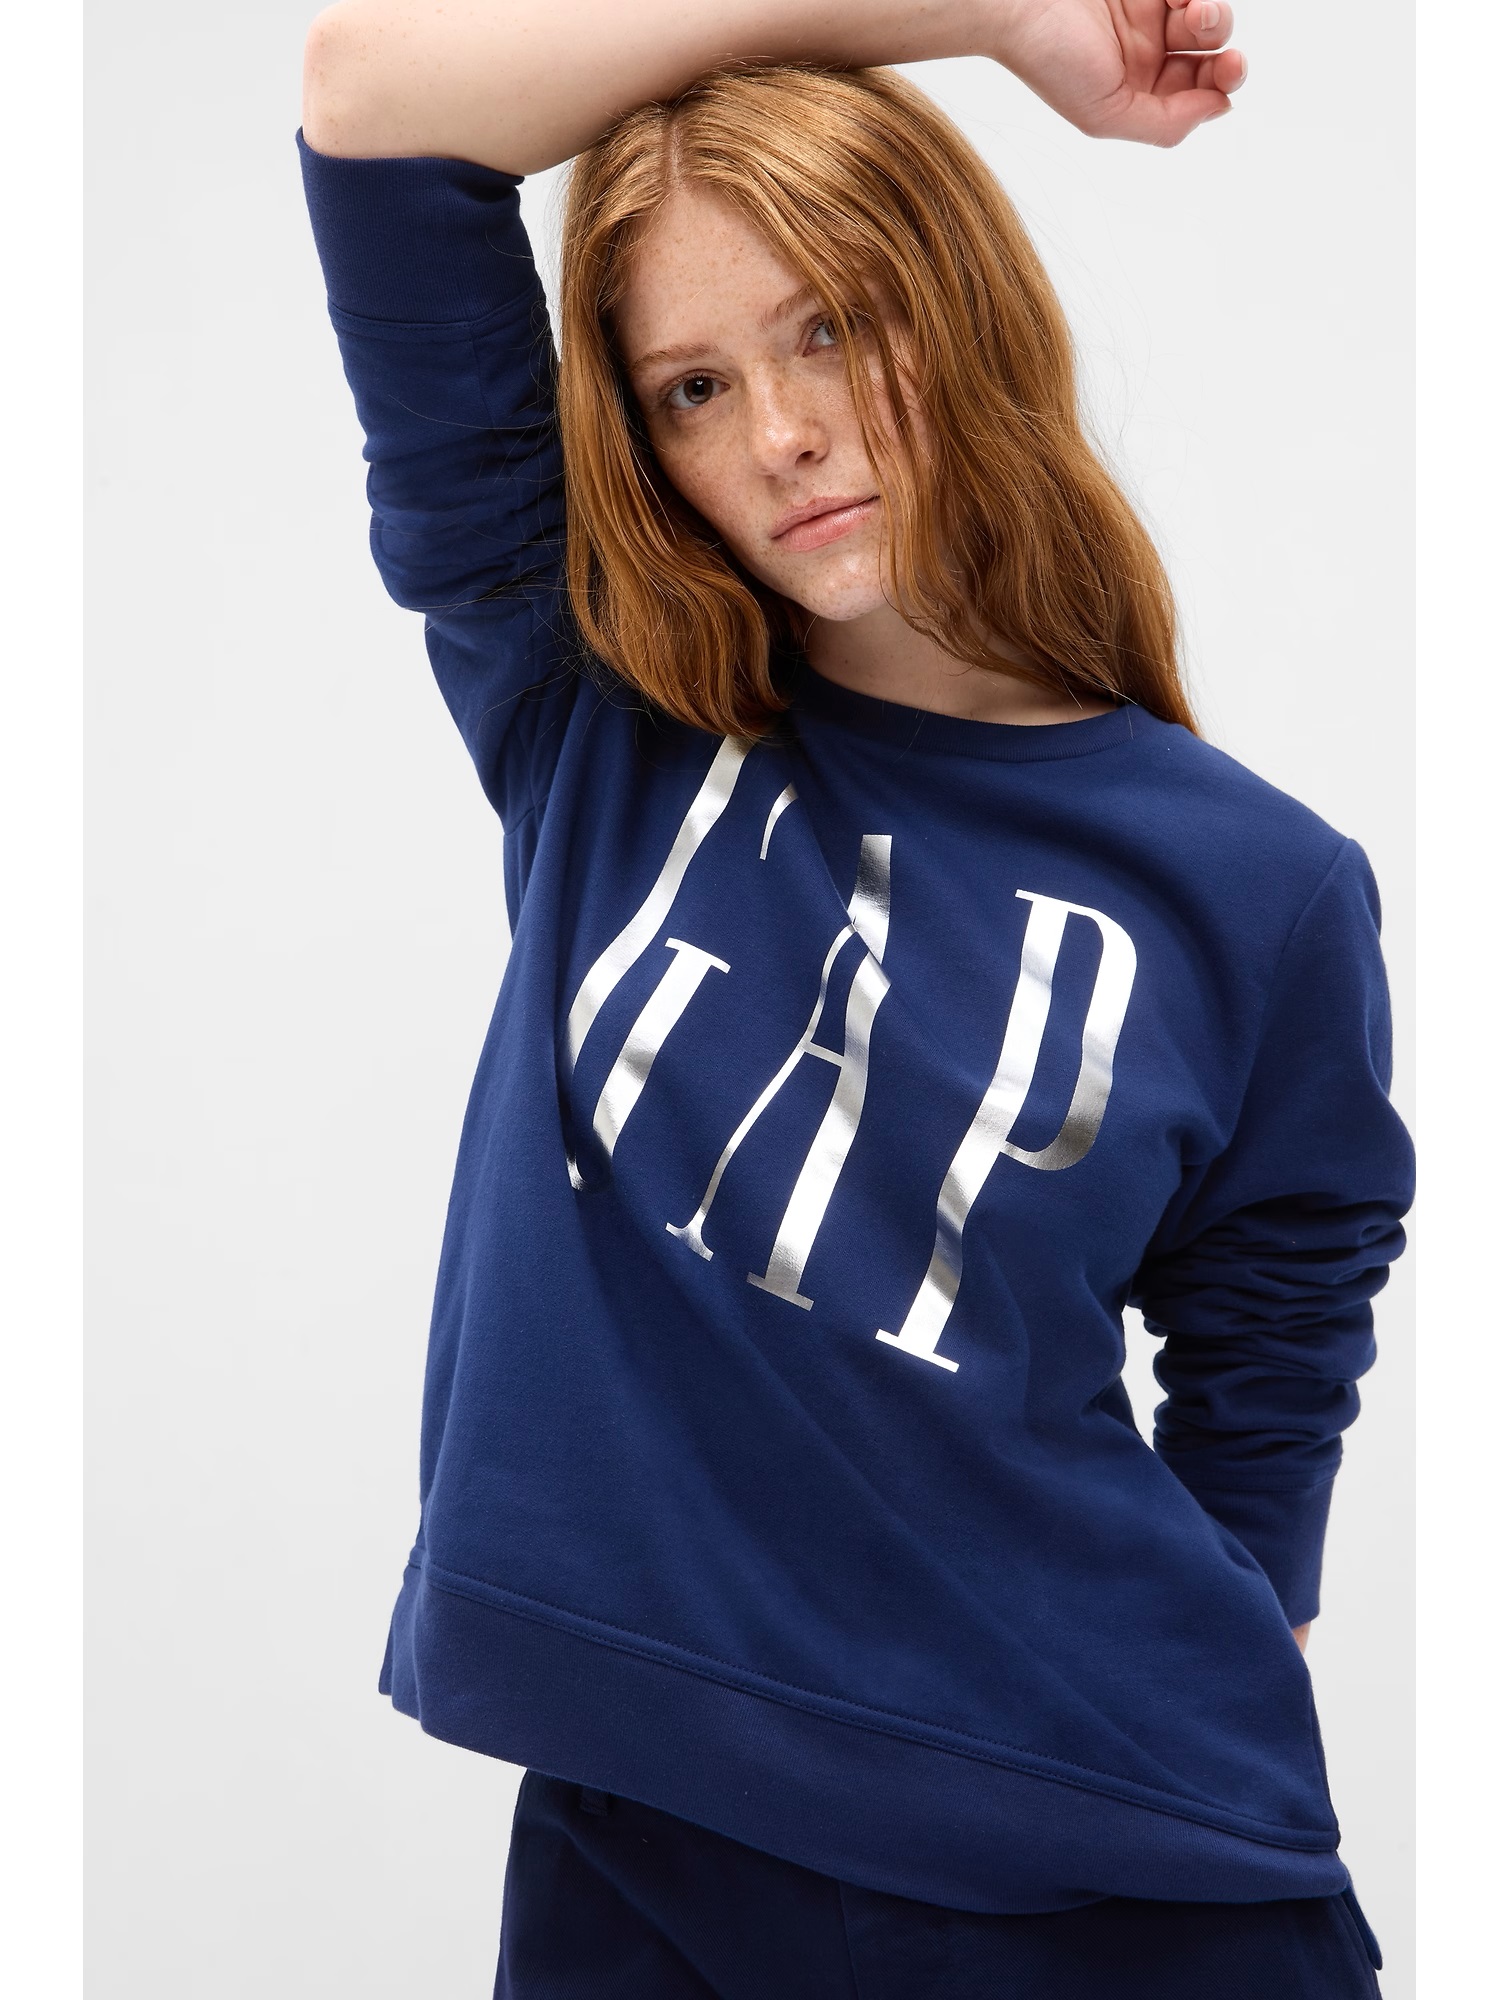 GAP Sweatshirt with metallic logo - Women